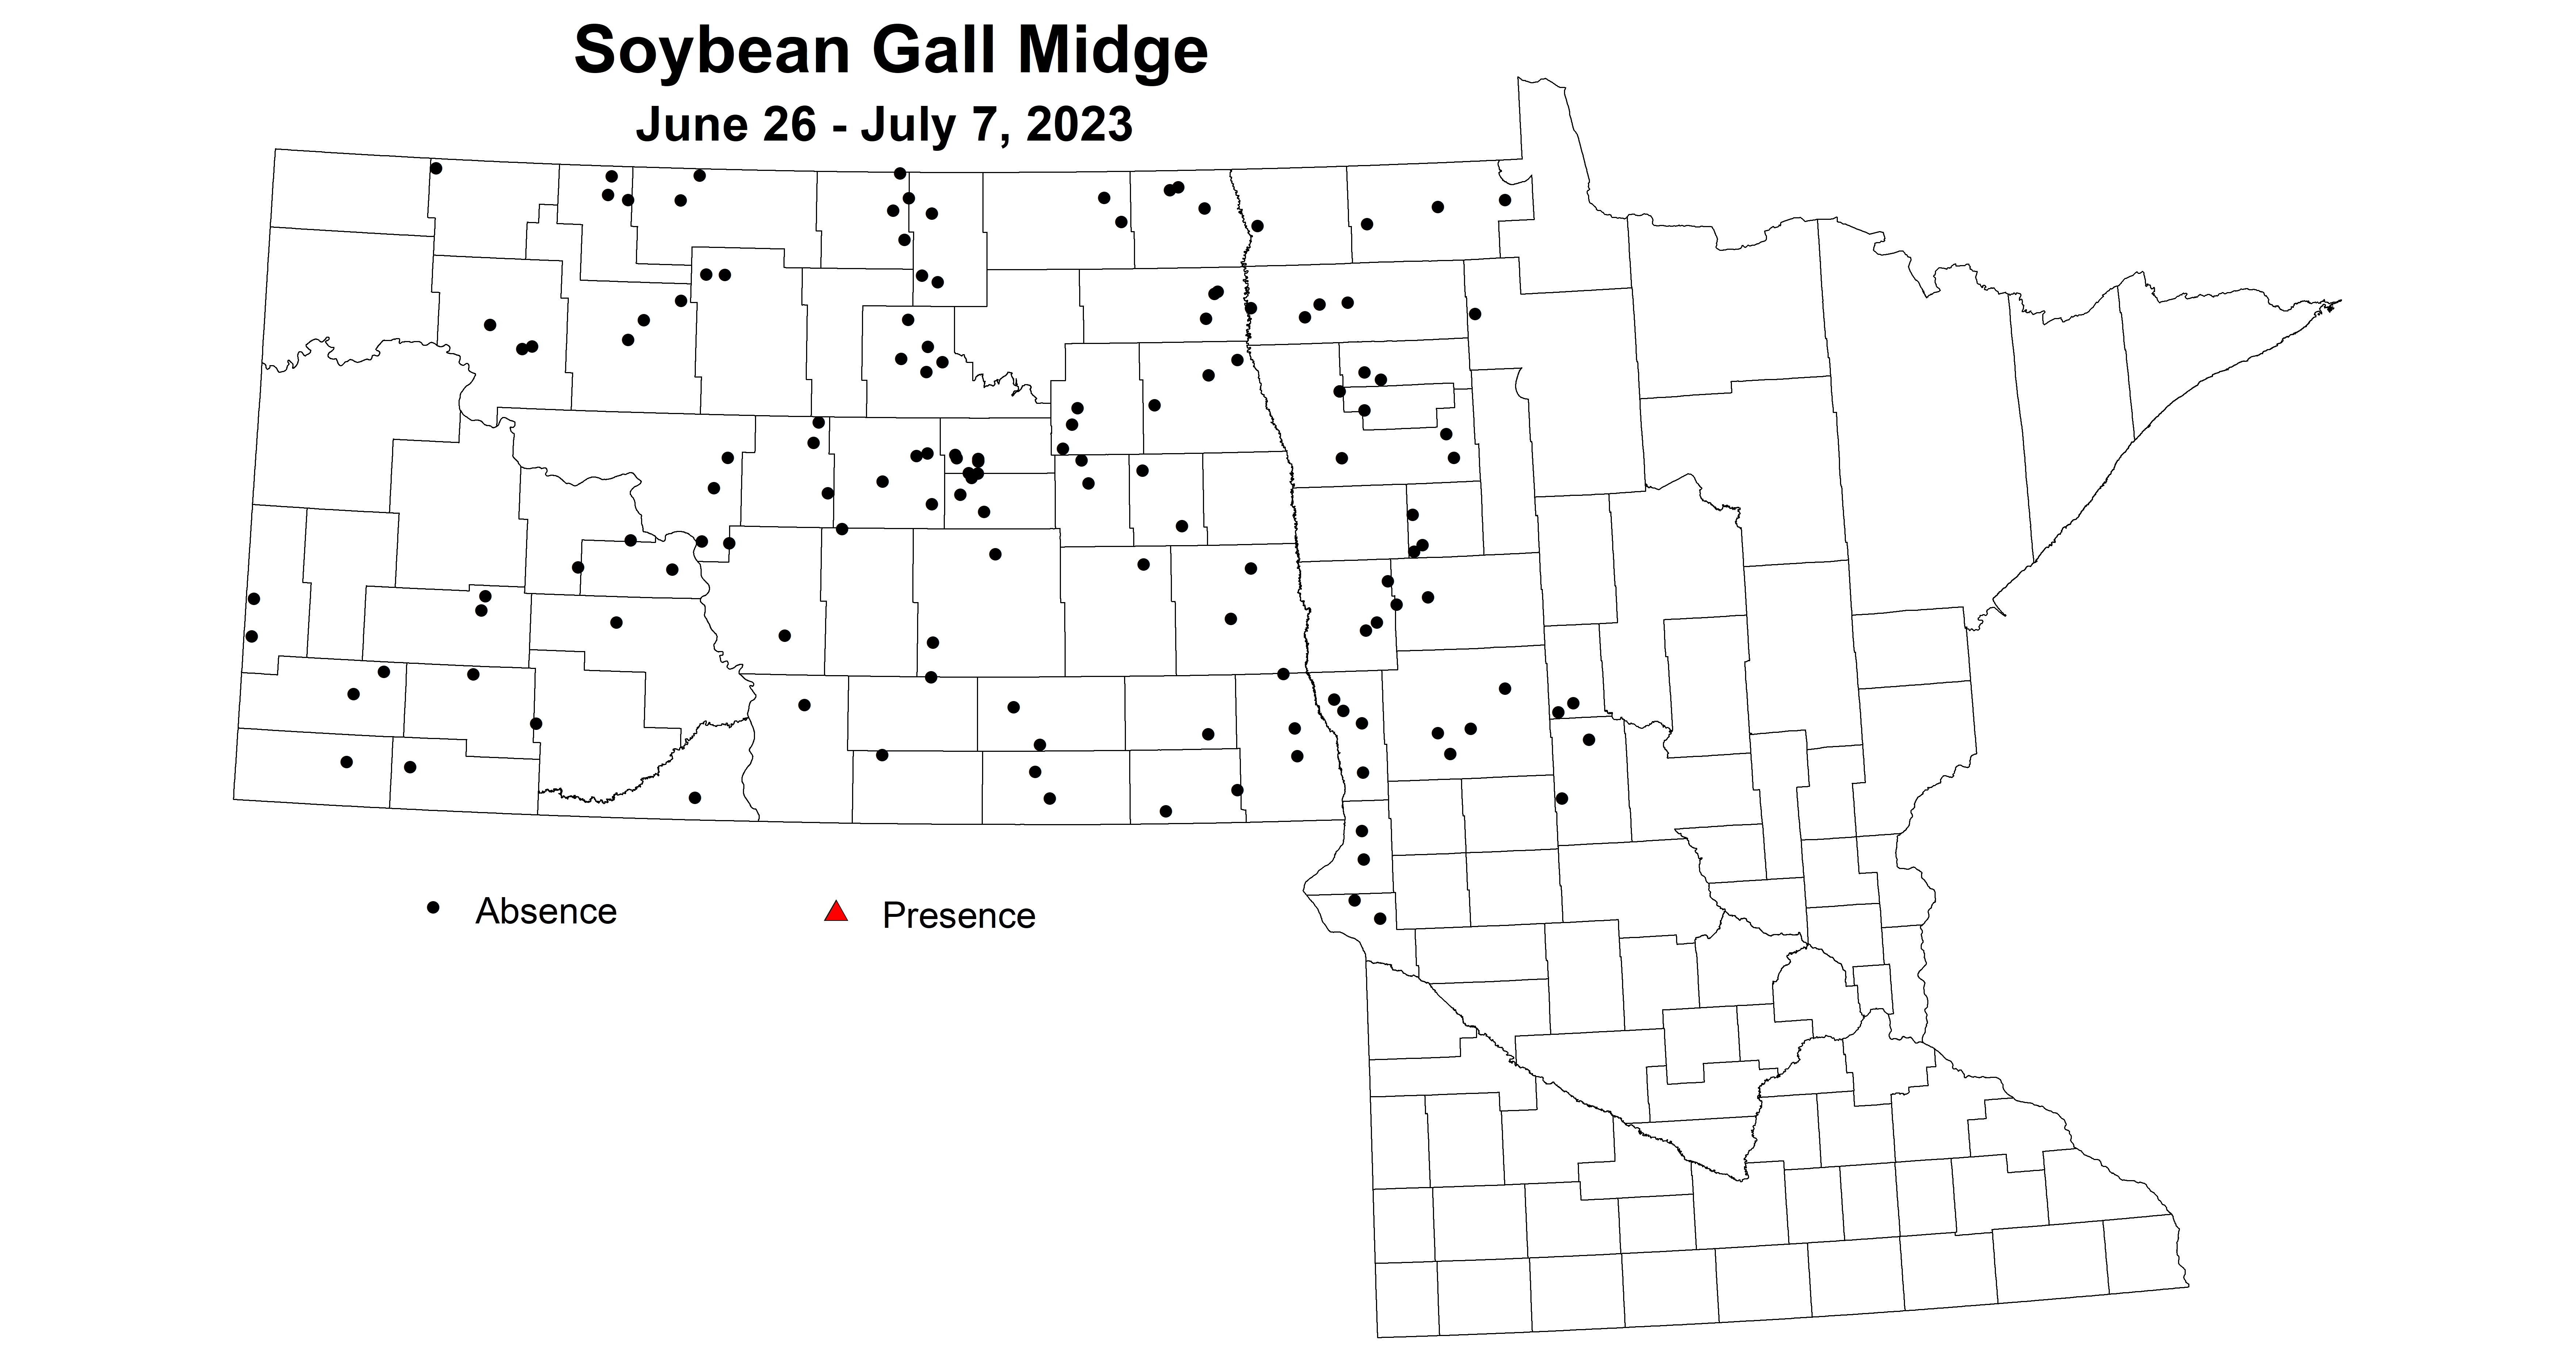 soybean gall midge June 26 - July 7 2023